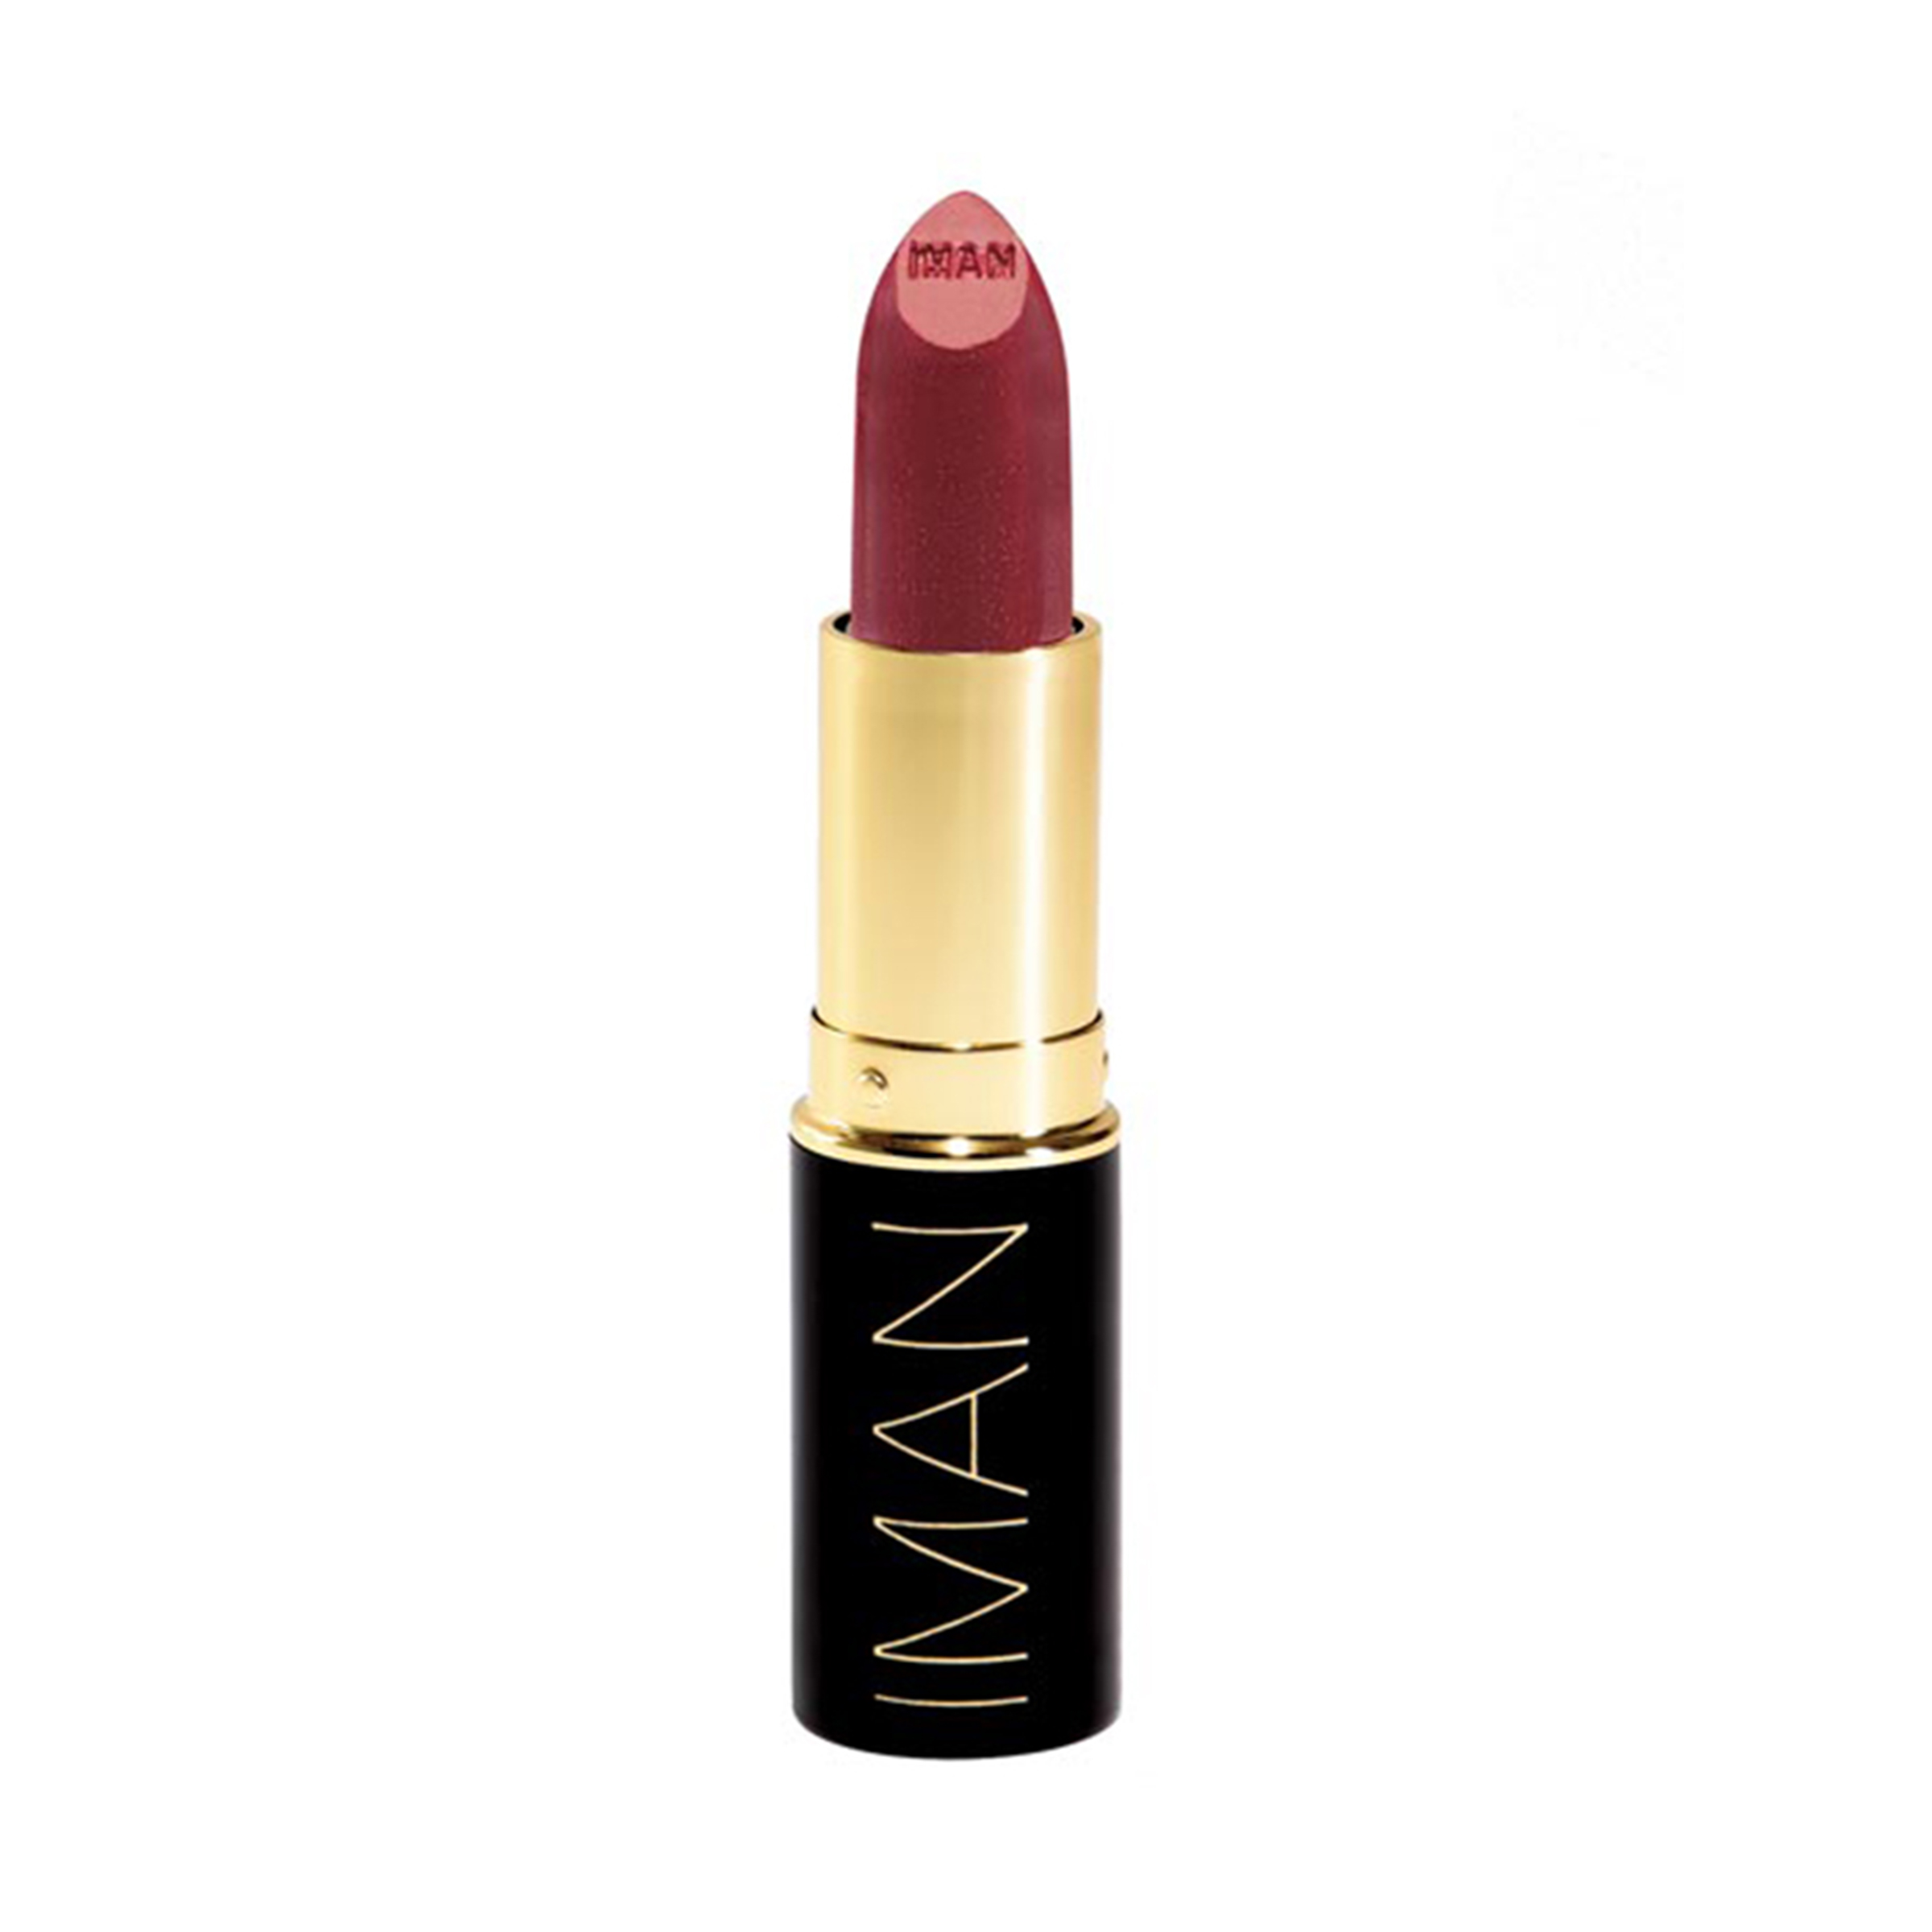 IMAN Luxury Moisturizing Lipstick, Scandalous - image 1 of 4